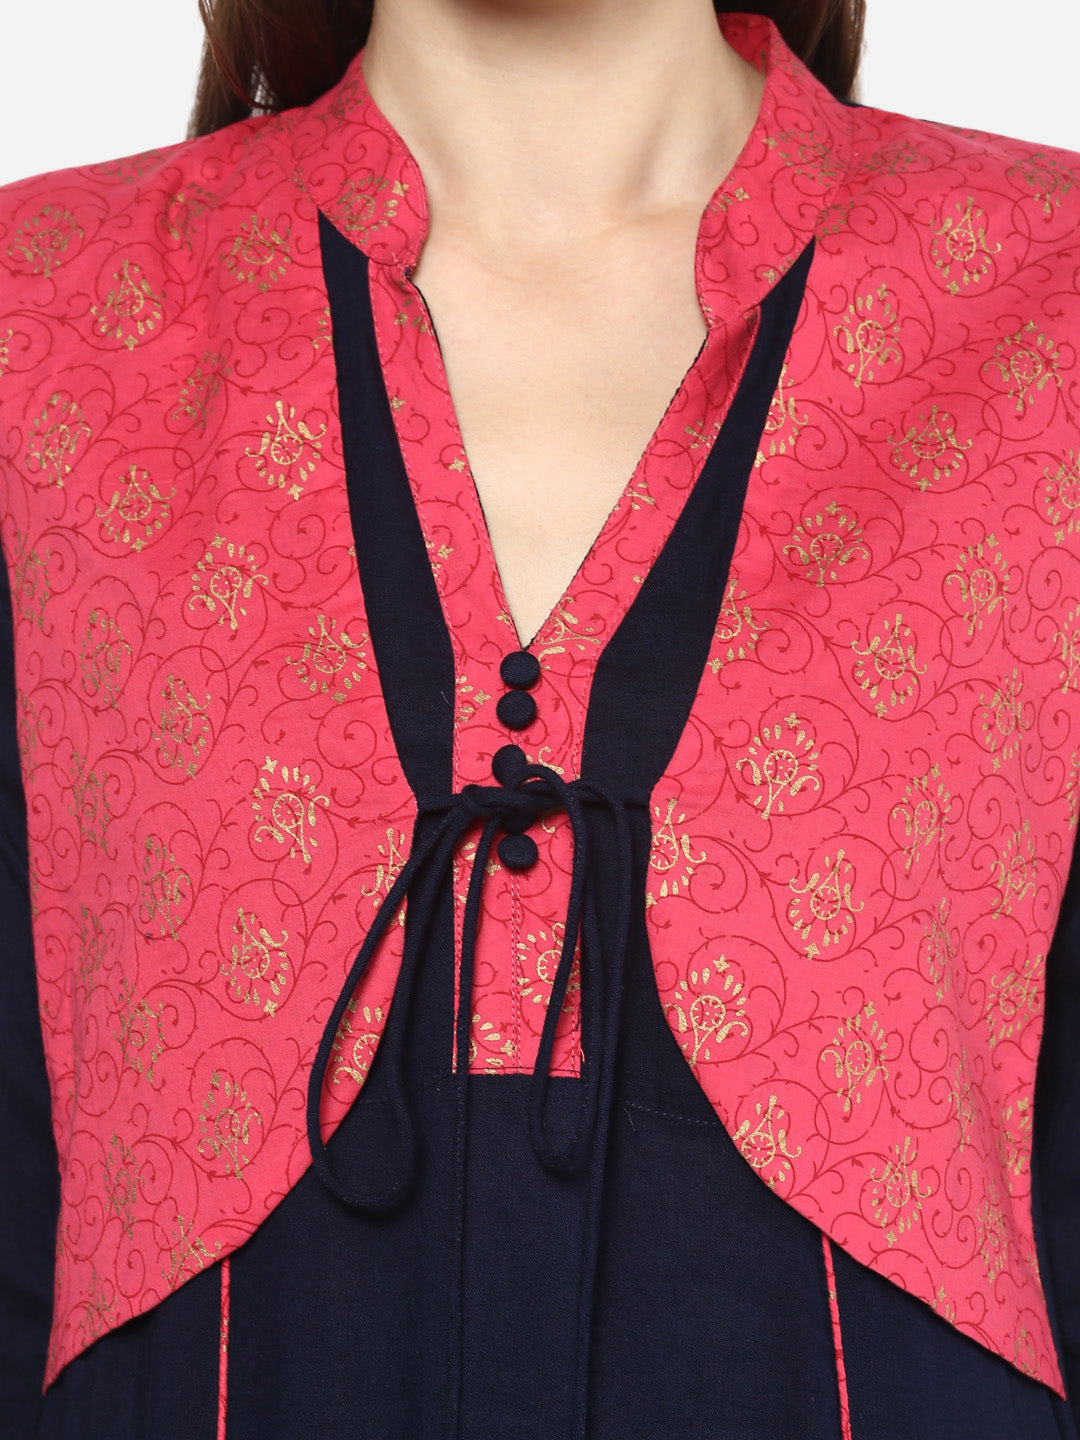 Women's Red and Navy Blue Jacket Style Anarkali Kurti